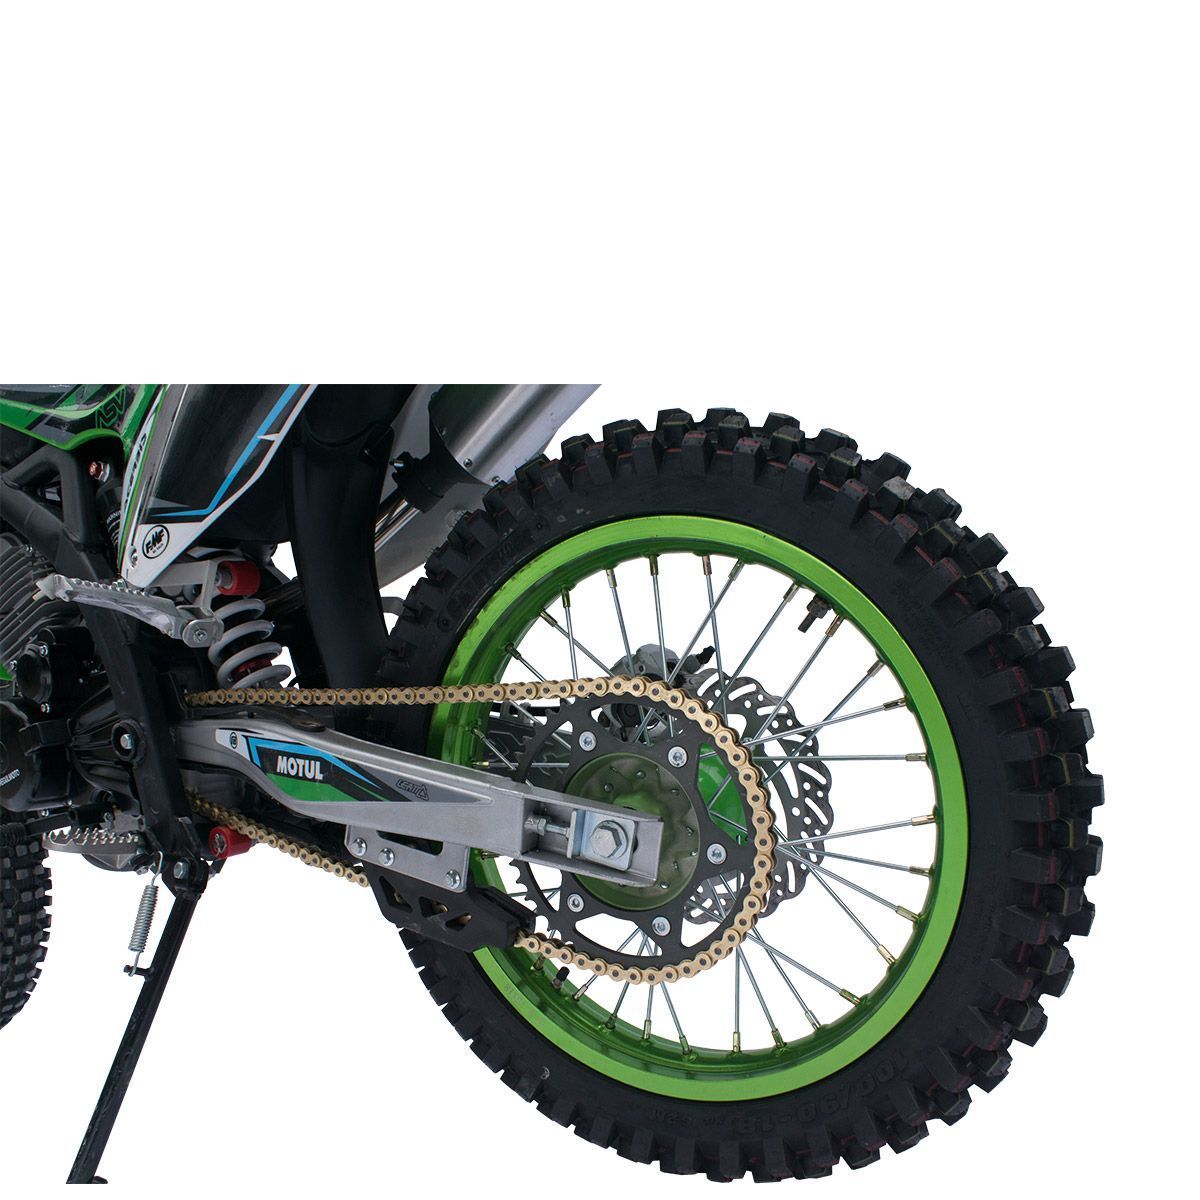 Мотоцикл SENKE ZR 250 купить по низкой цене